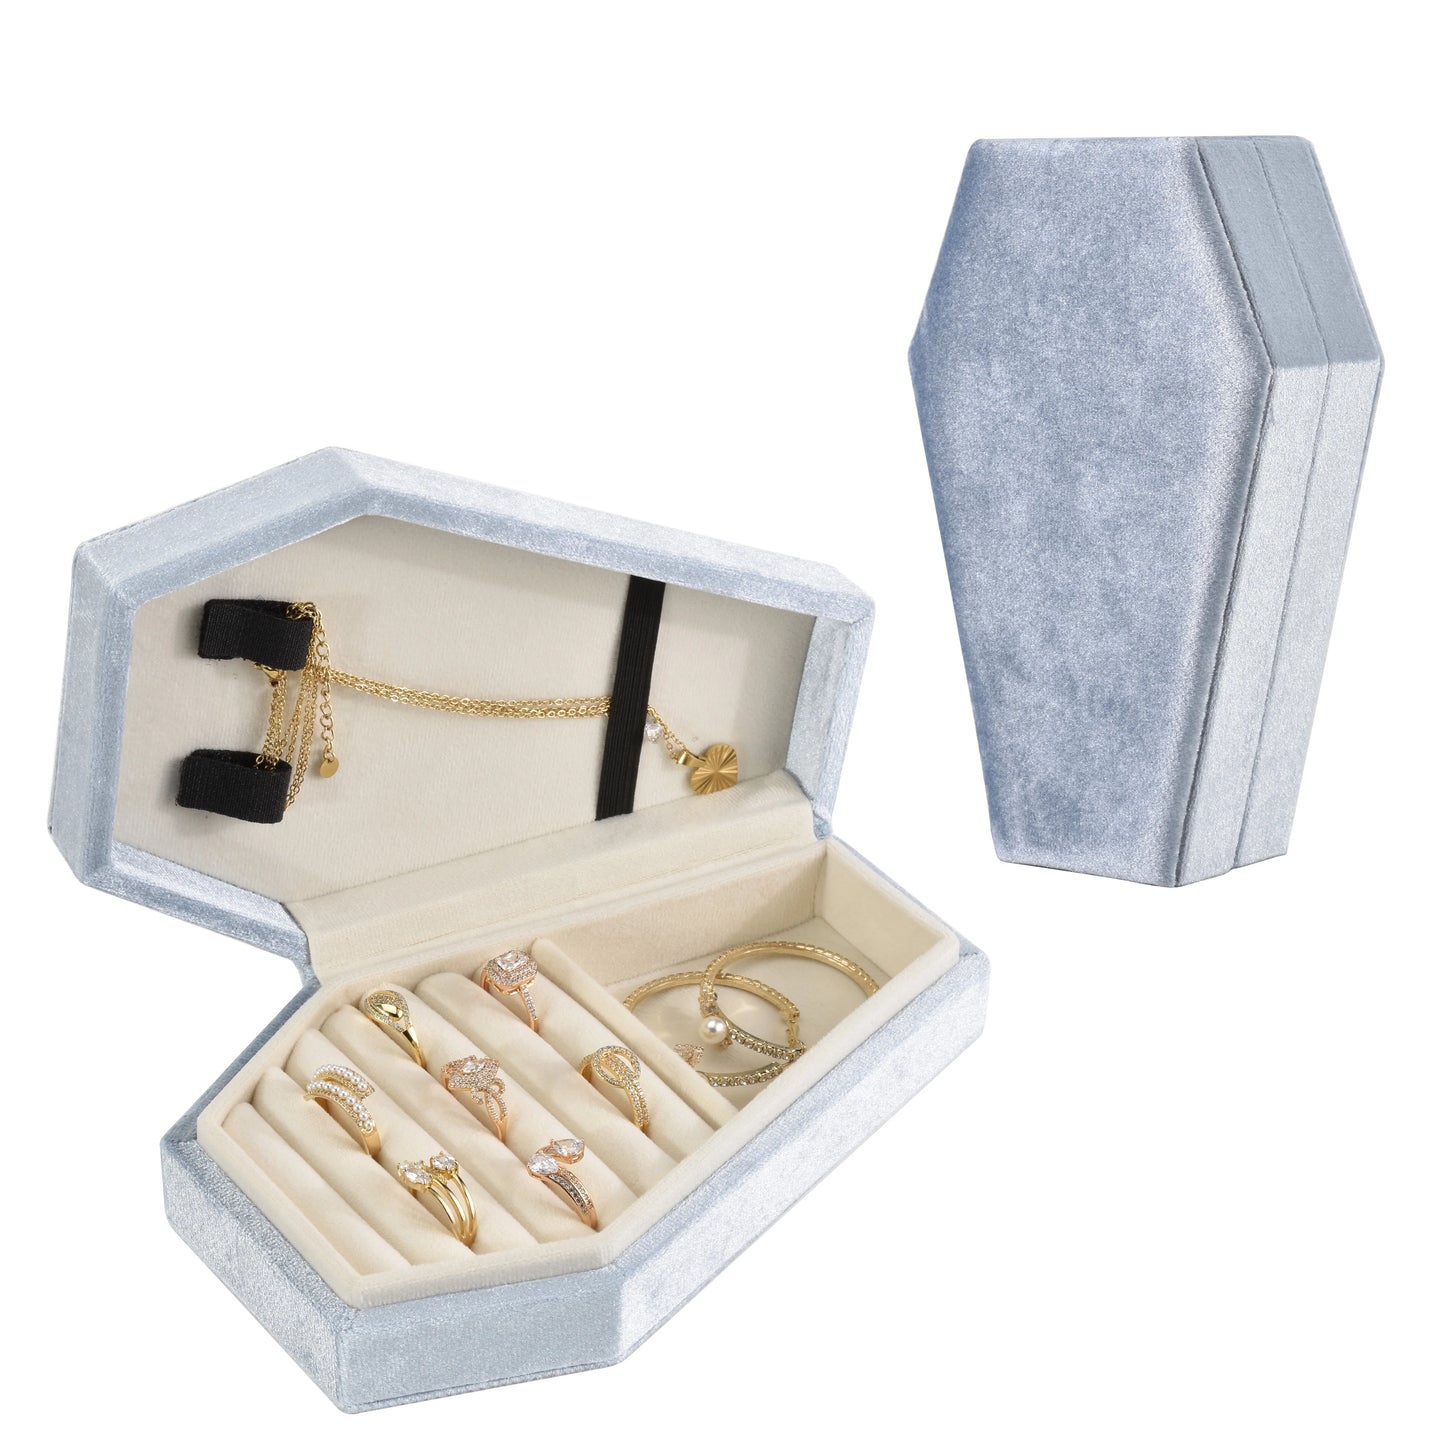 TAIMY Saints' Day Party Supplies Custom Velvet Gothic Coffin Jewelry Box Gothic Skull Trinket Box Halloween Gift